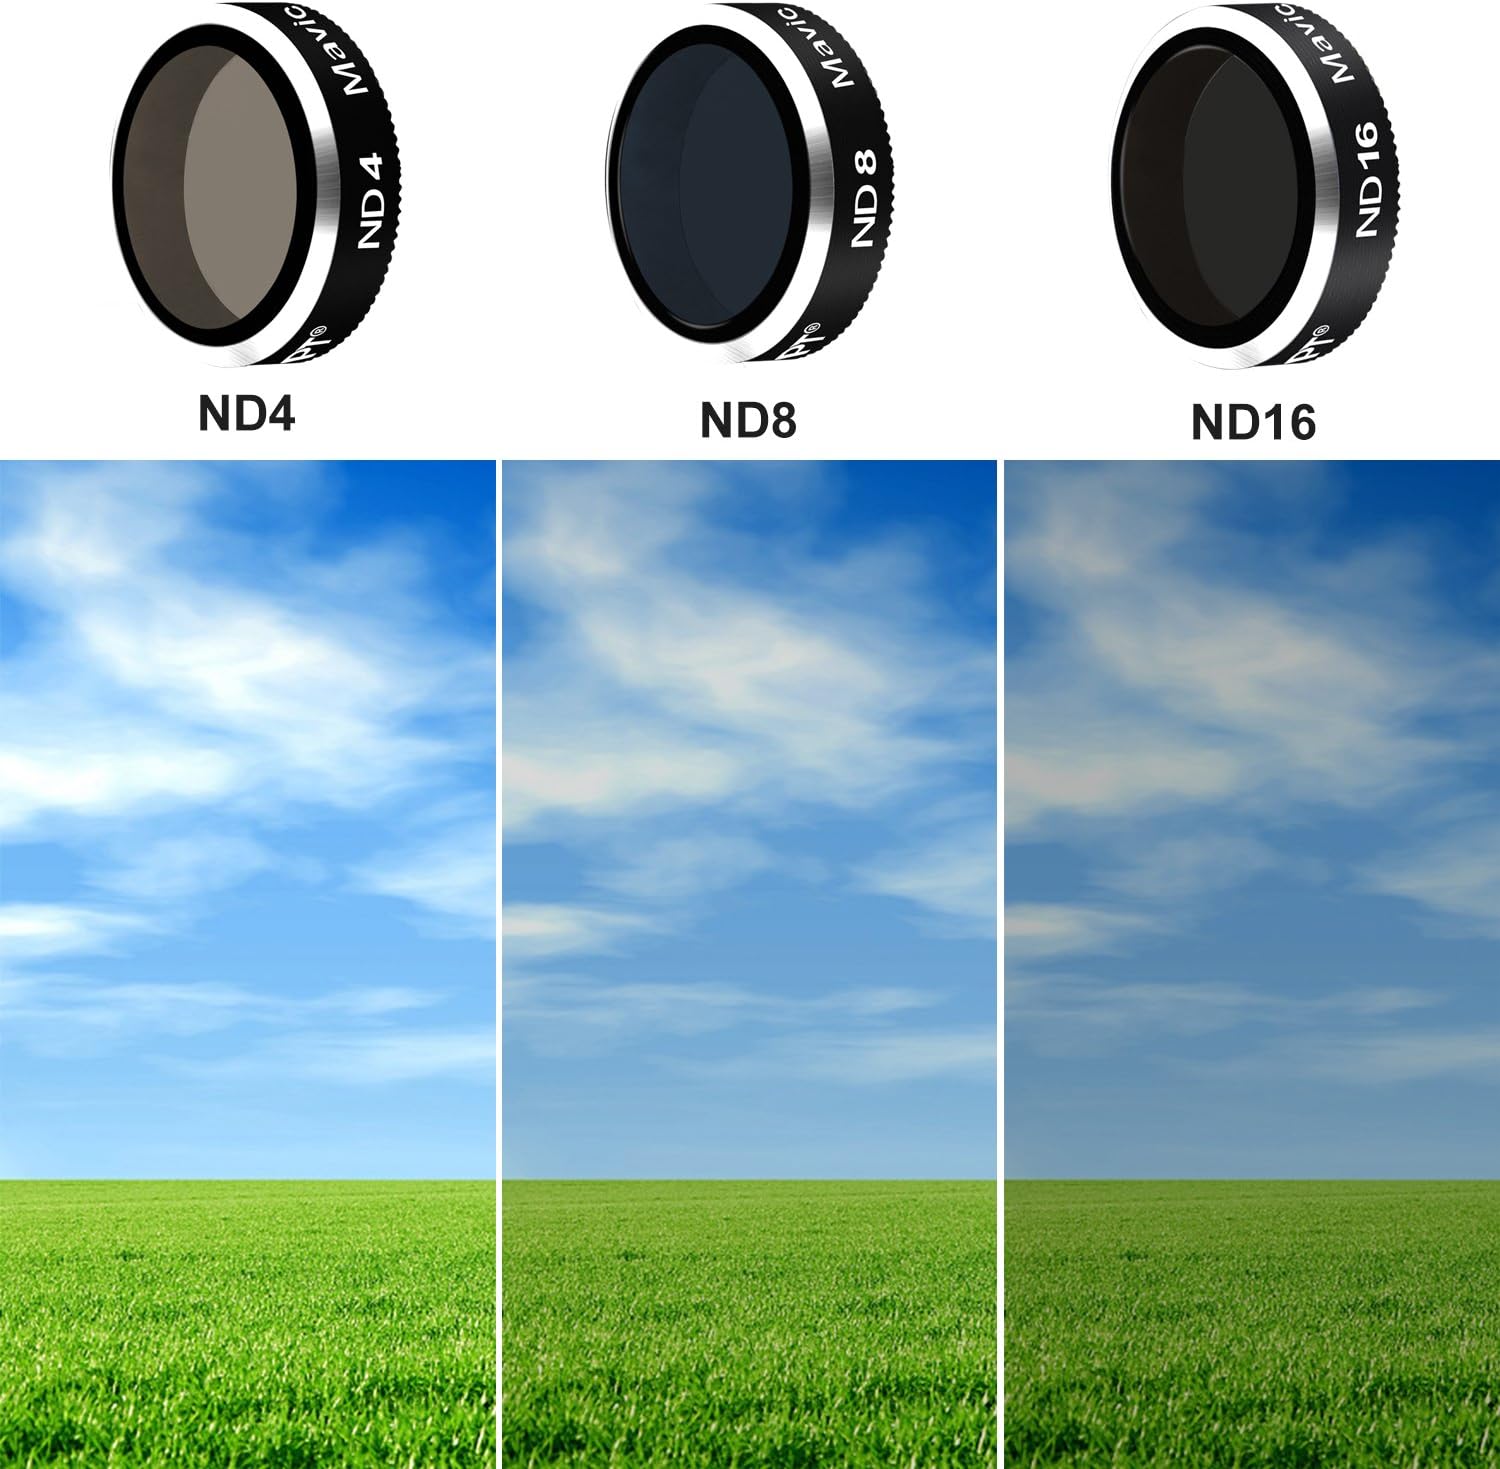 K&F Concept DJI Mavic Air Lens Filters (6 Pack) ND4, ND8, ND16, ND4/CPL, ND8/CPL, ND16/CPL UHD Glass and Aluminum Thread Frame